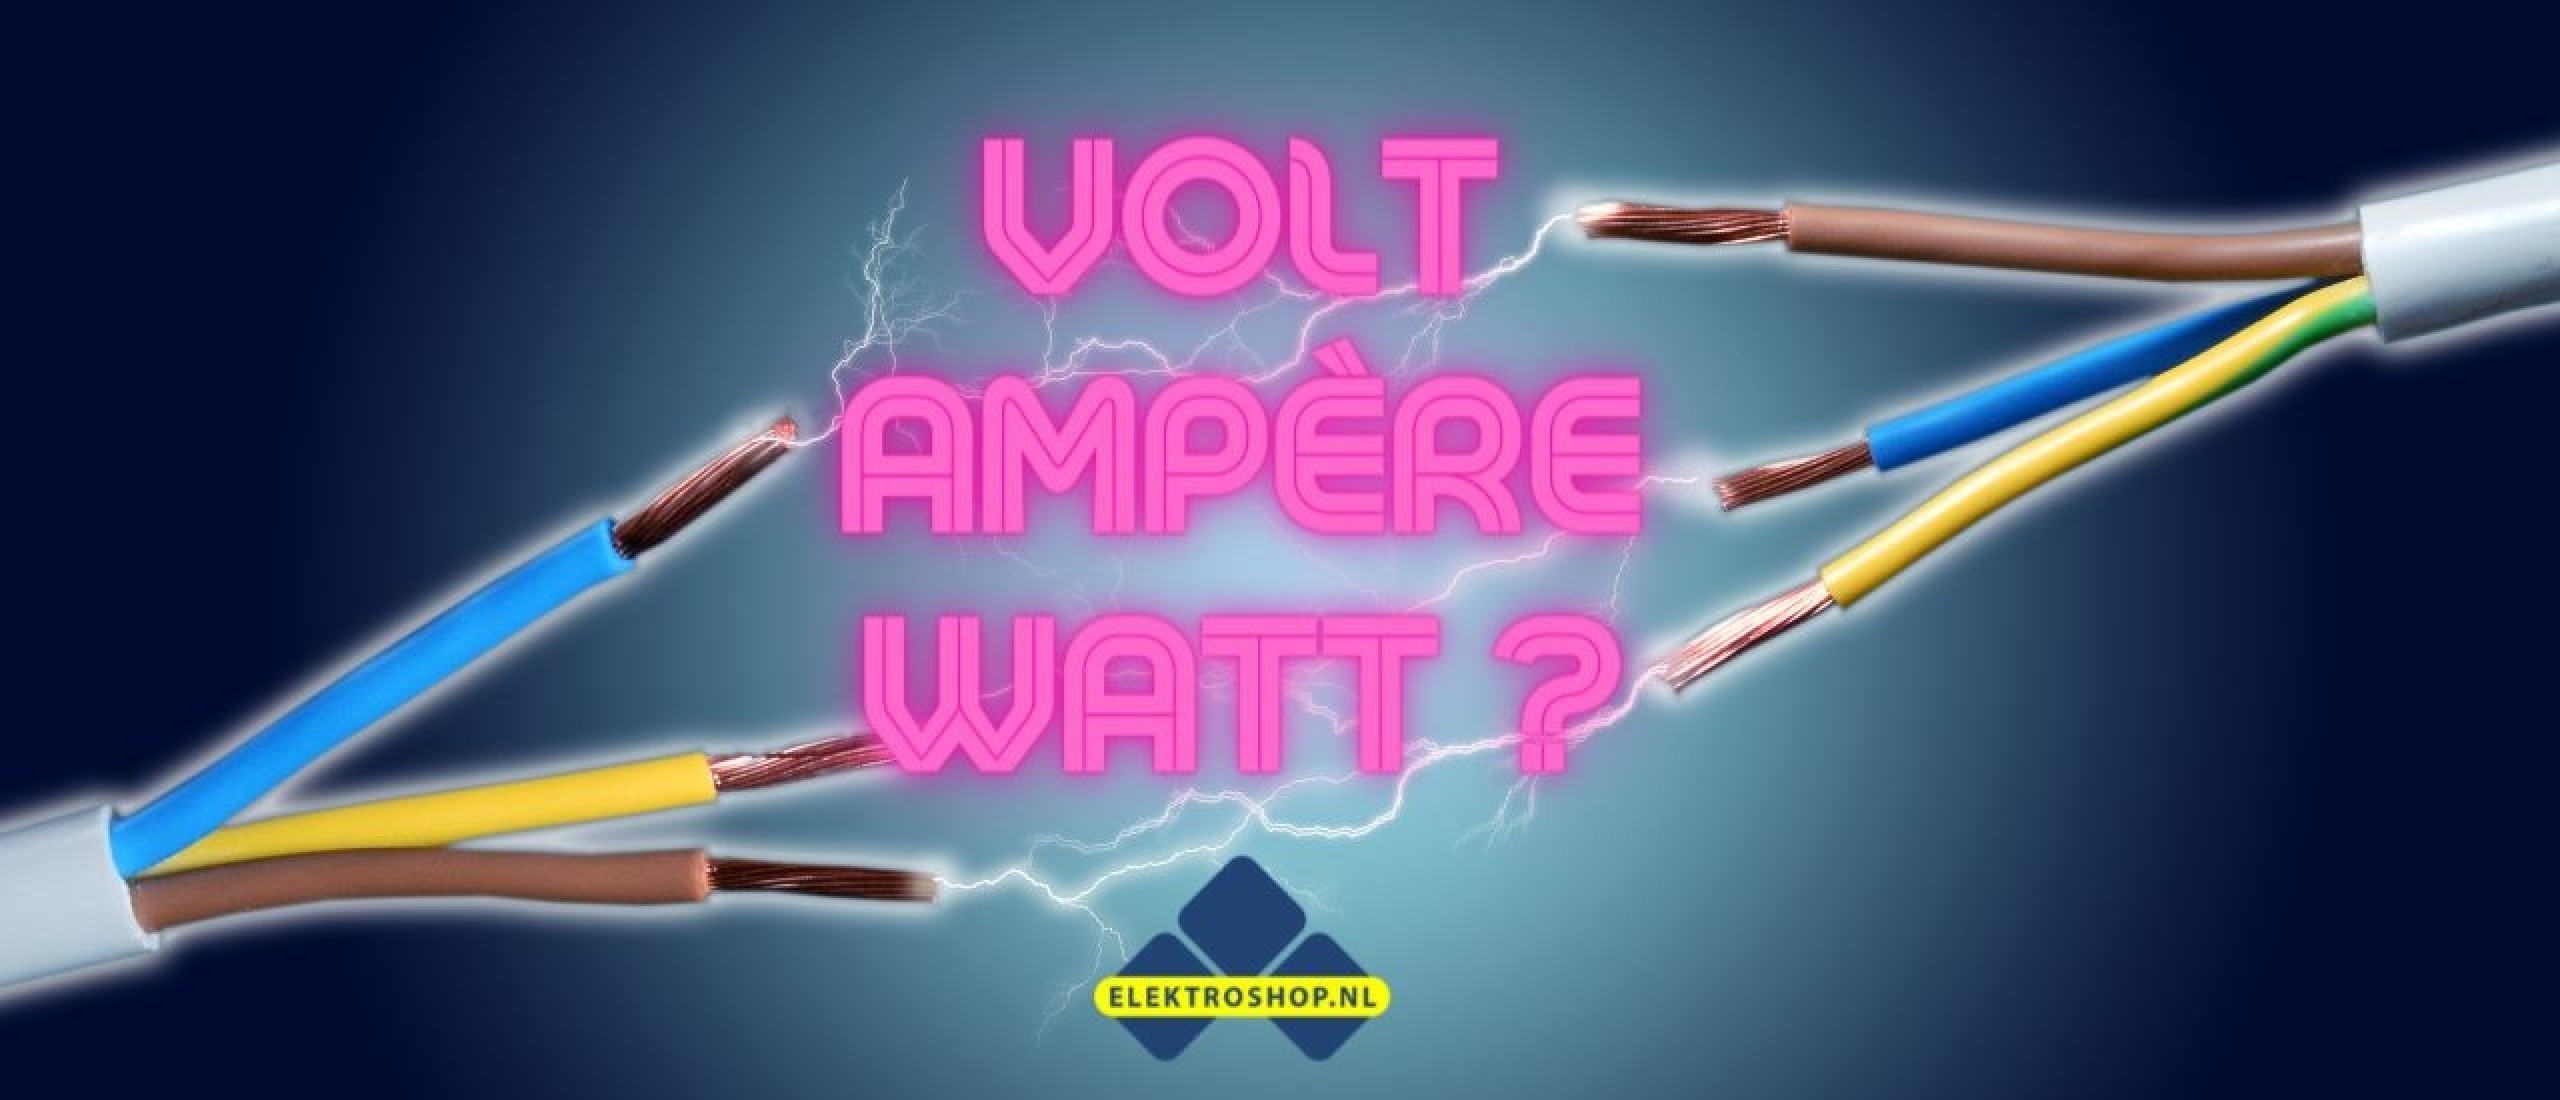 Wat is Volt, Ampère en Watt?